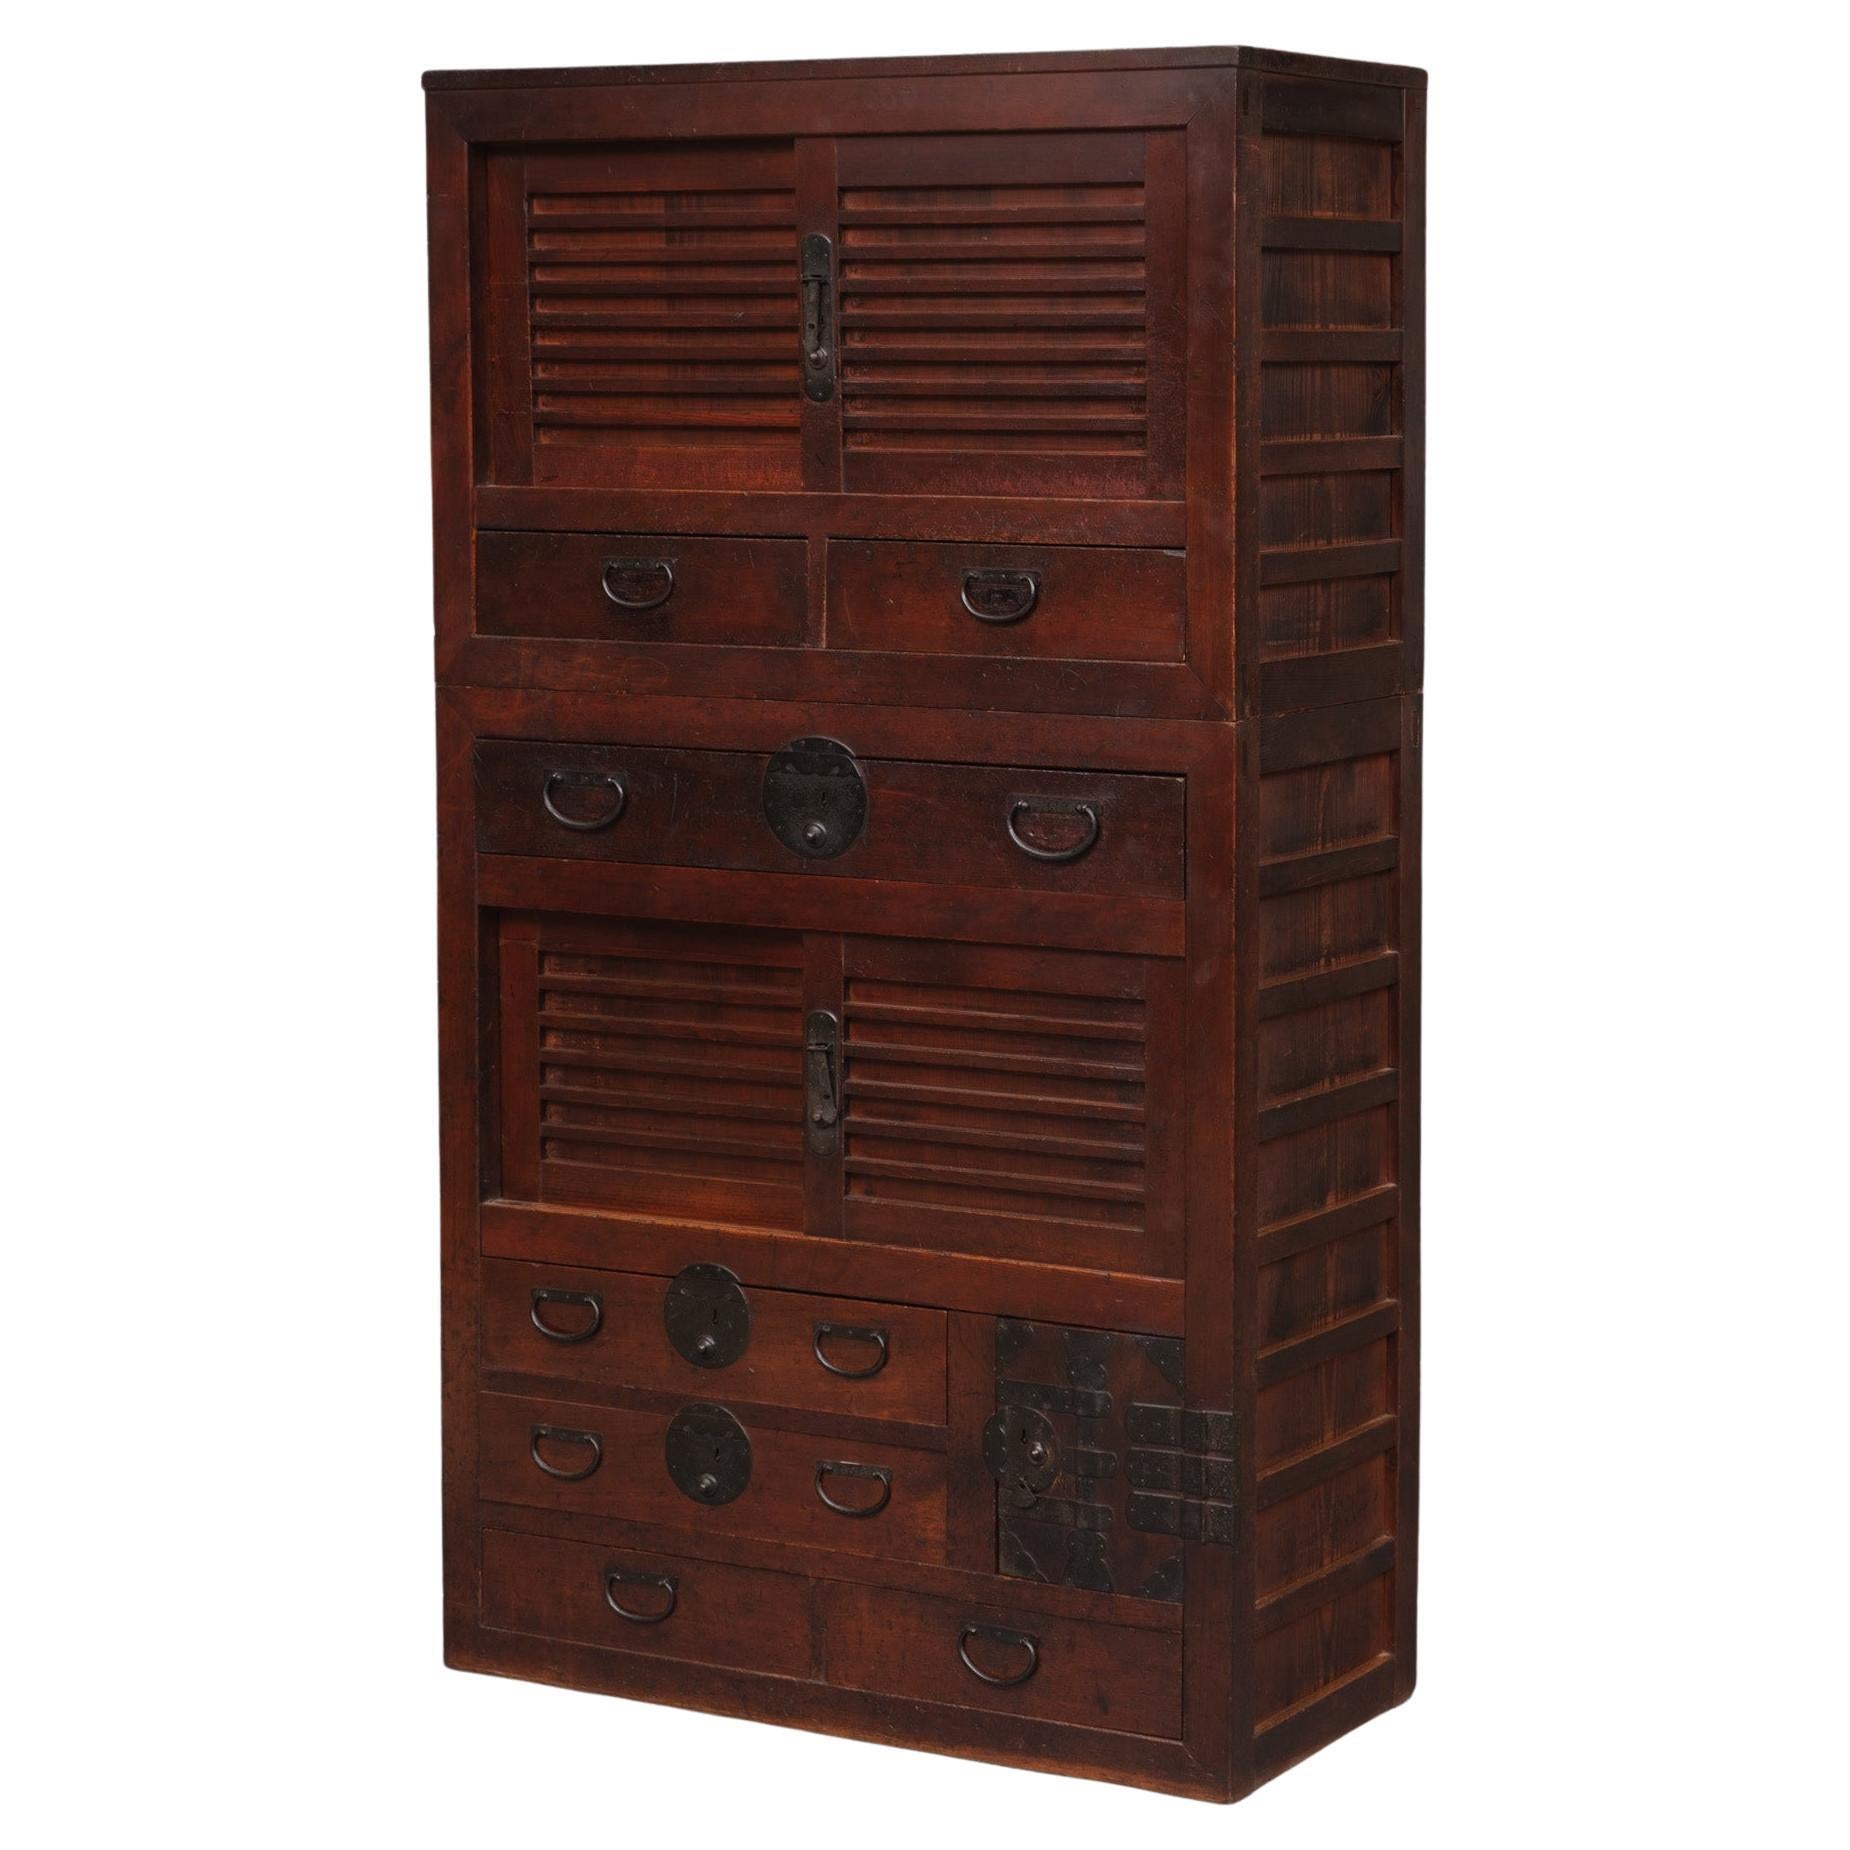 Japanese Gifu wooden chôba’dansu 帳場箪笥 (merchant's document cabinet)